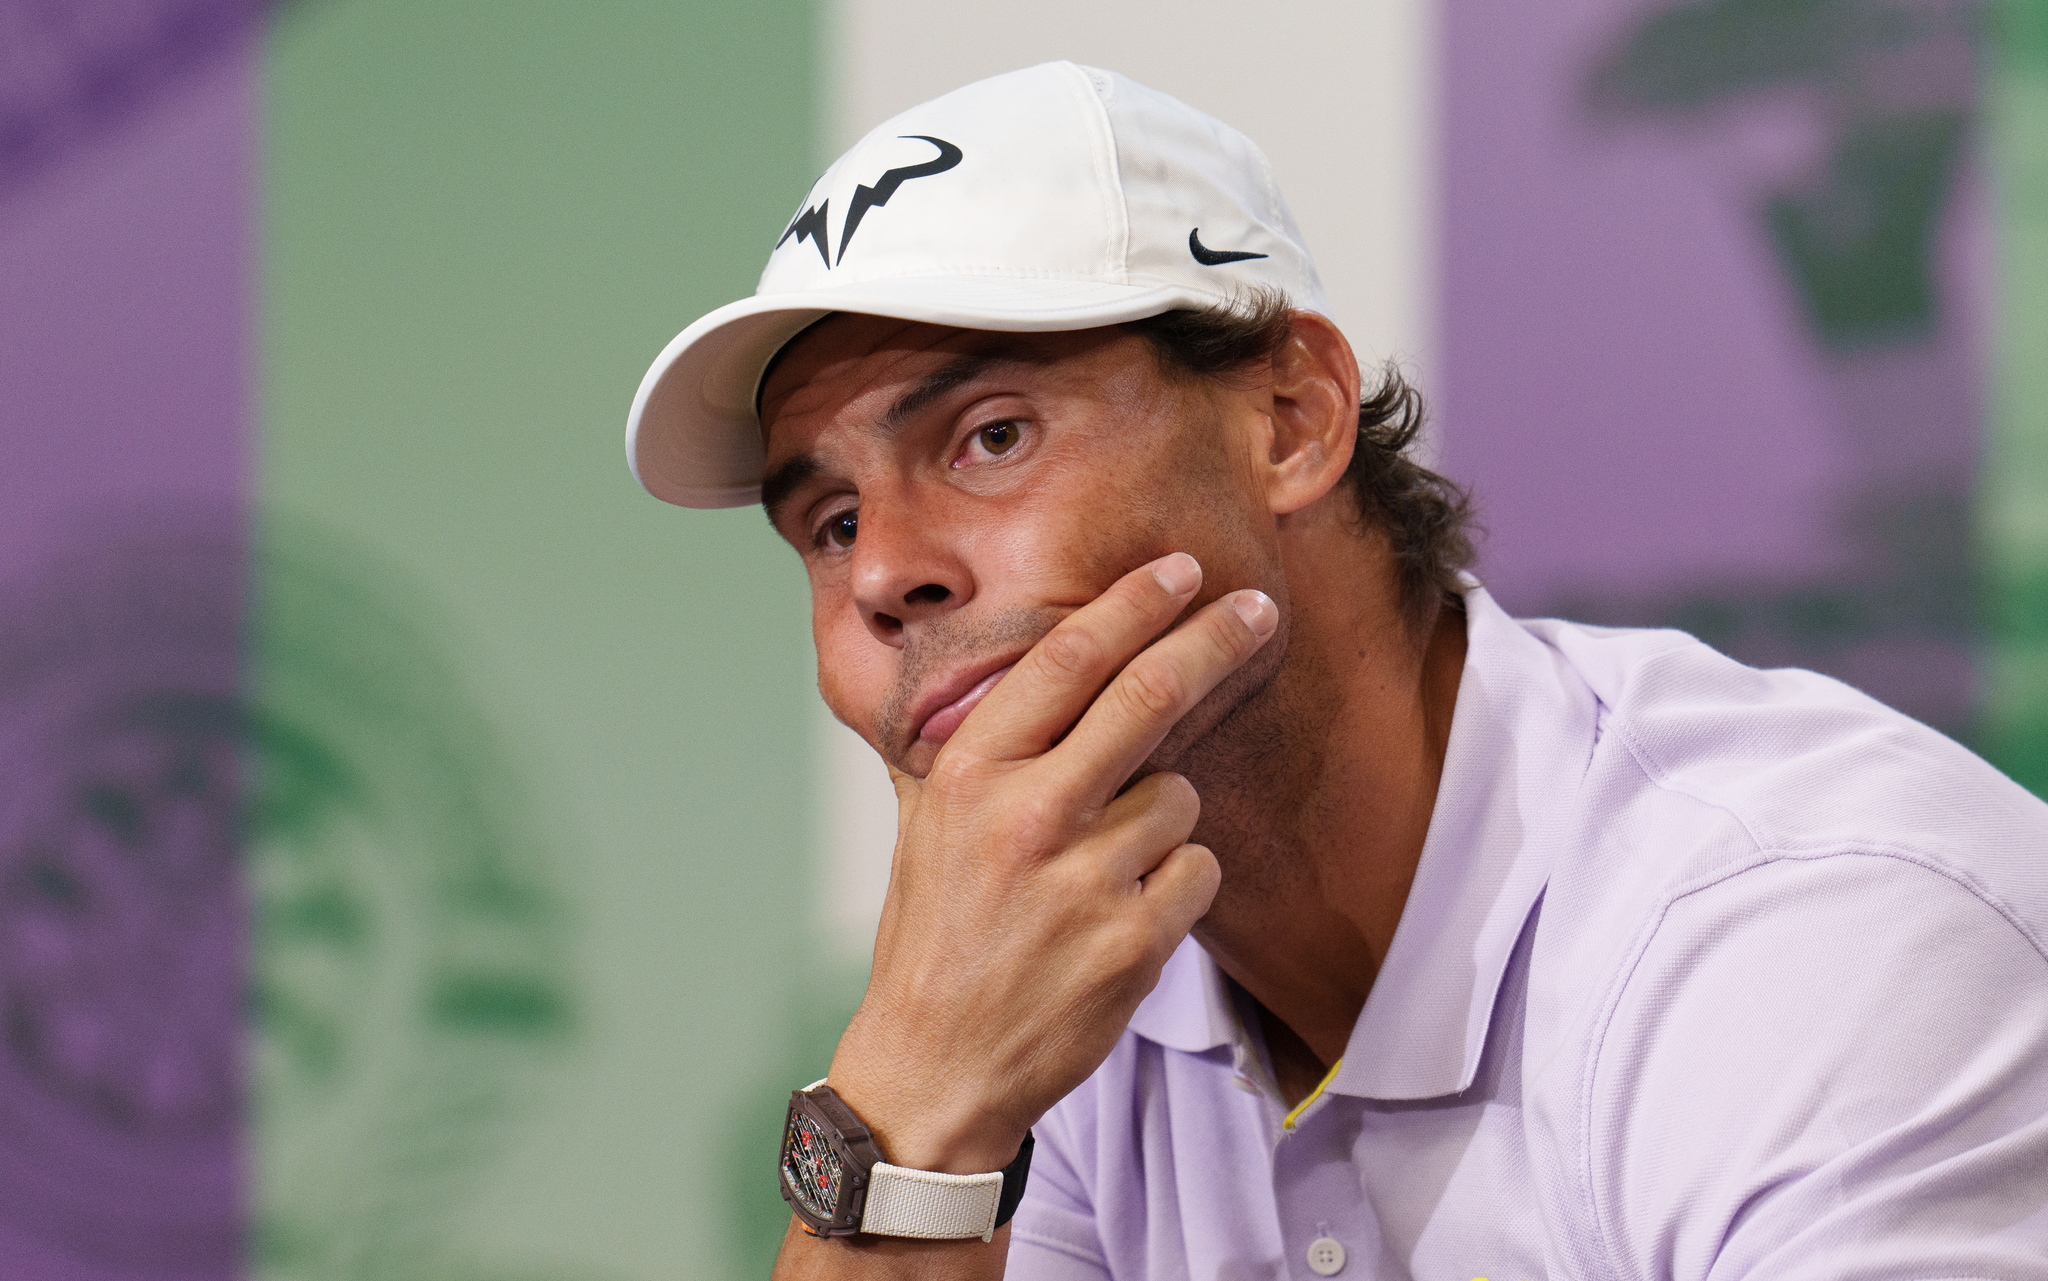 Rafael Nadal announcing his withdrawal from Wimbledon 2022